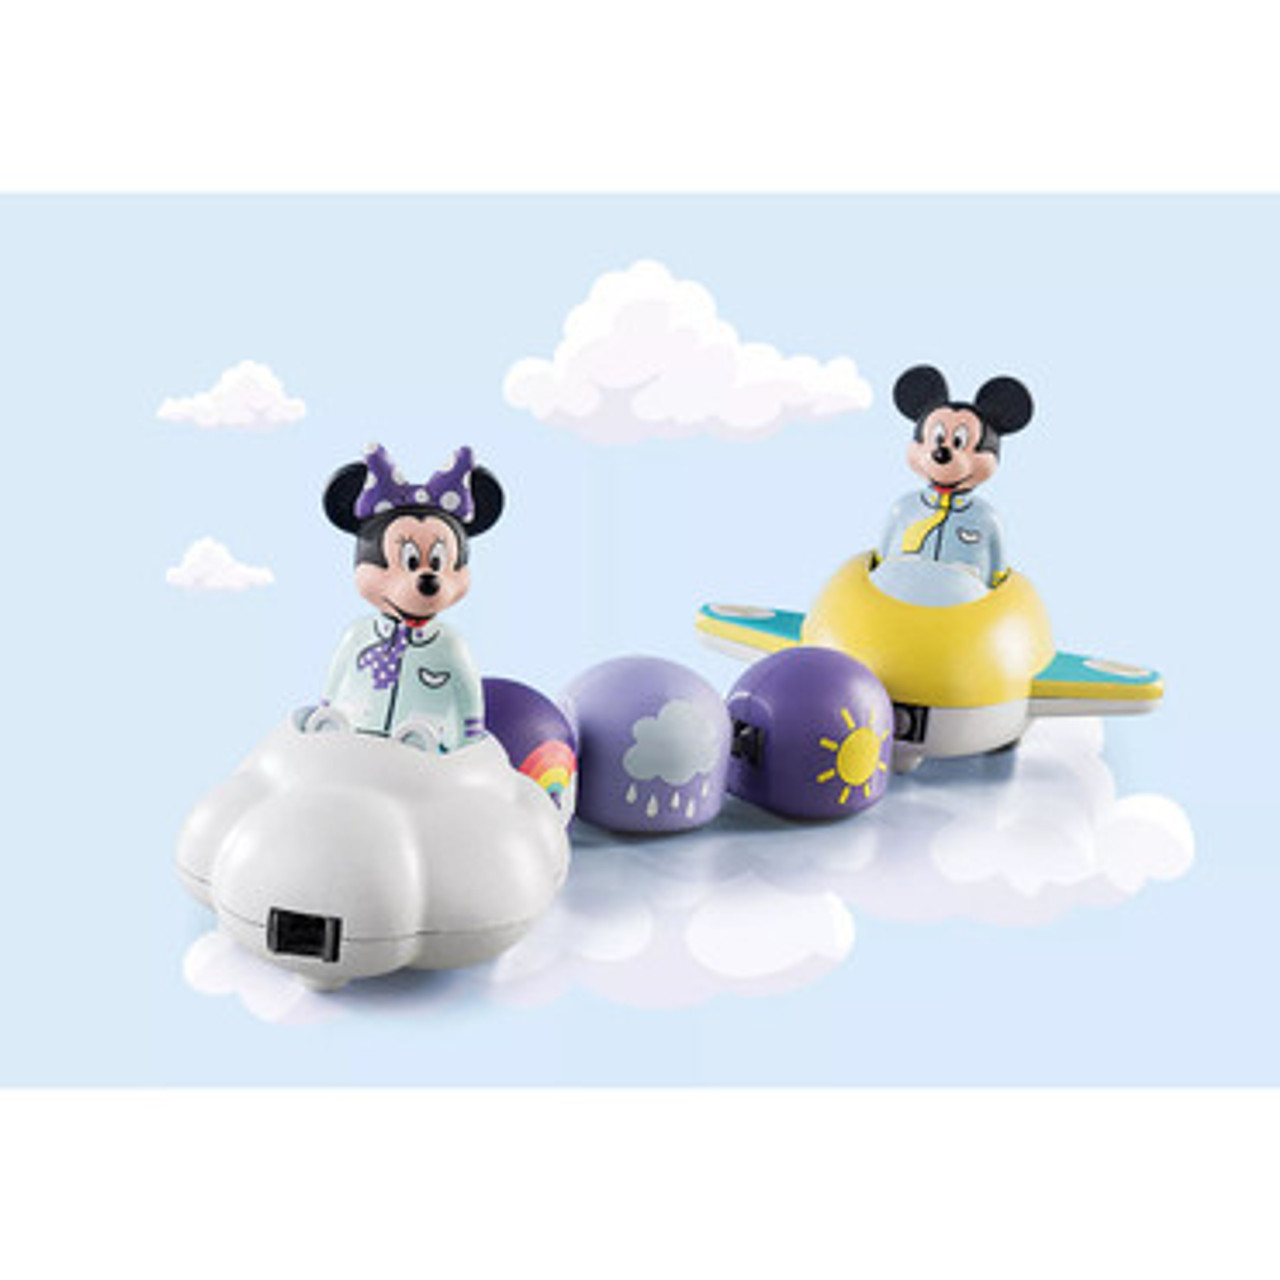 Playmobil 1-2-3 Disney - Mickey's and Minnie's Cloud Ride - MACkite